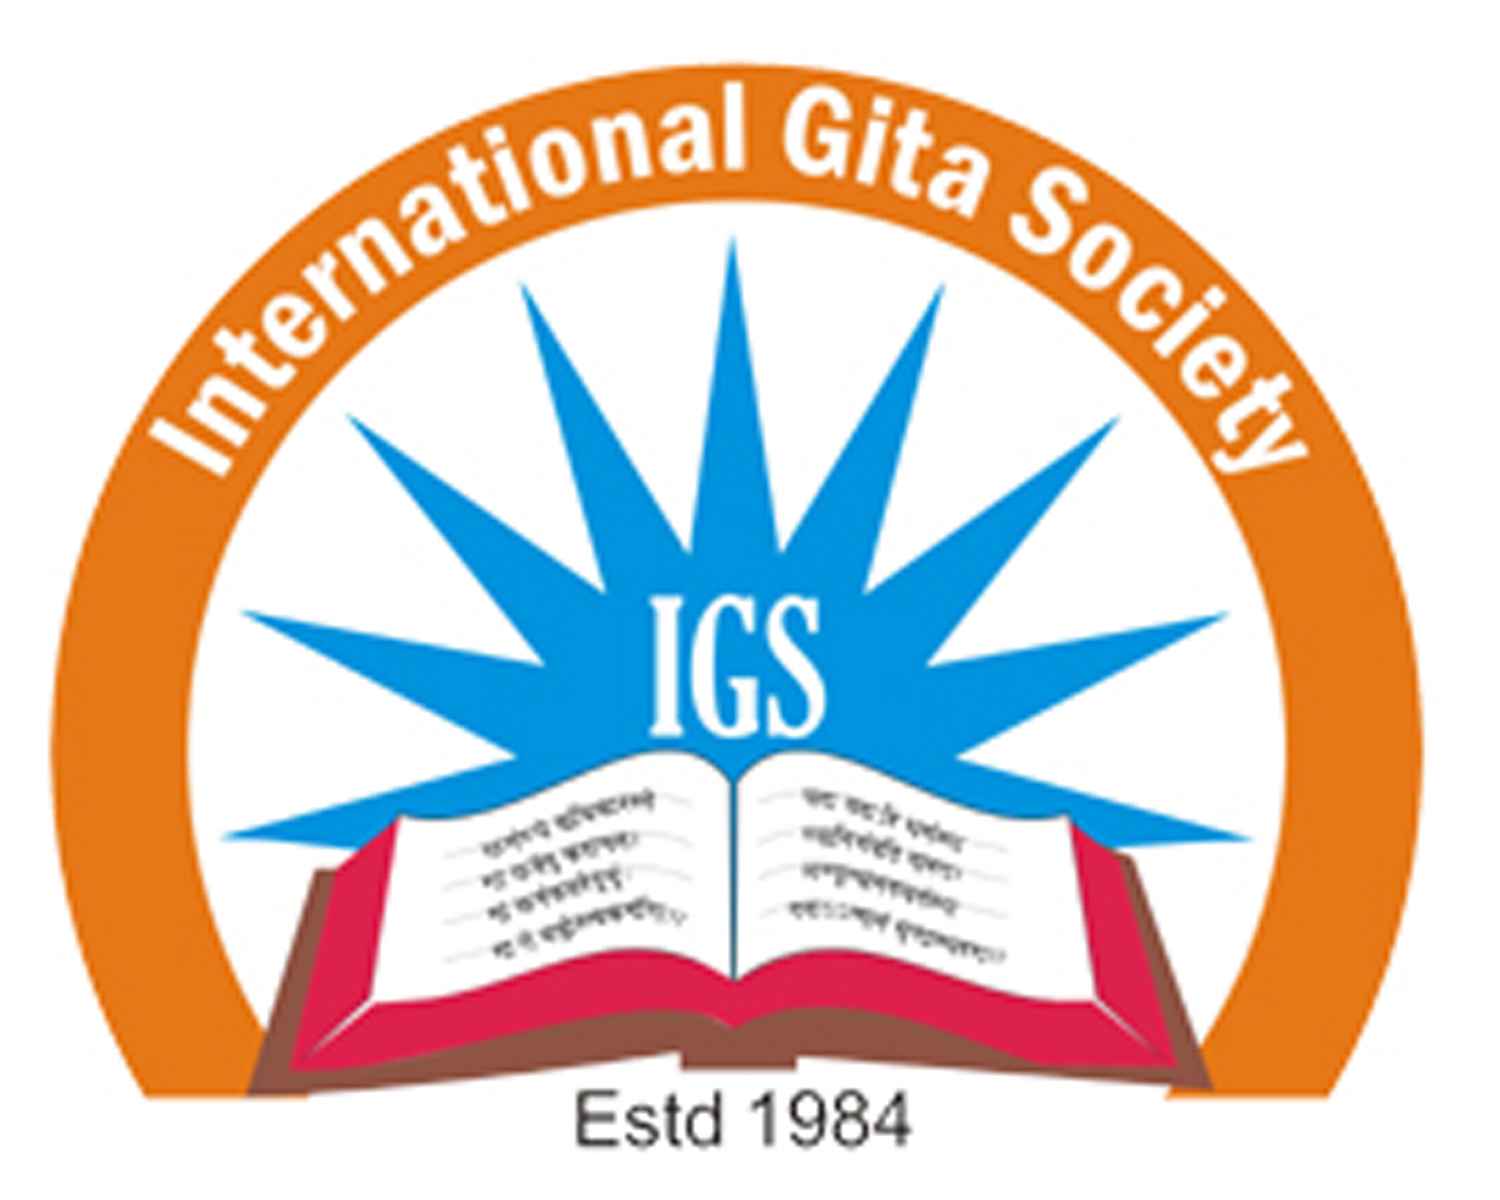 IGS logo